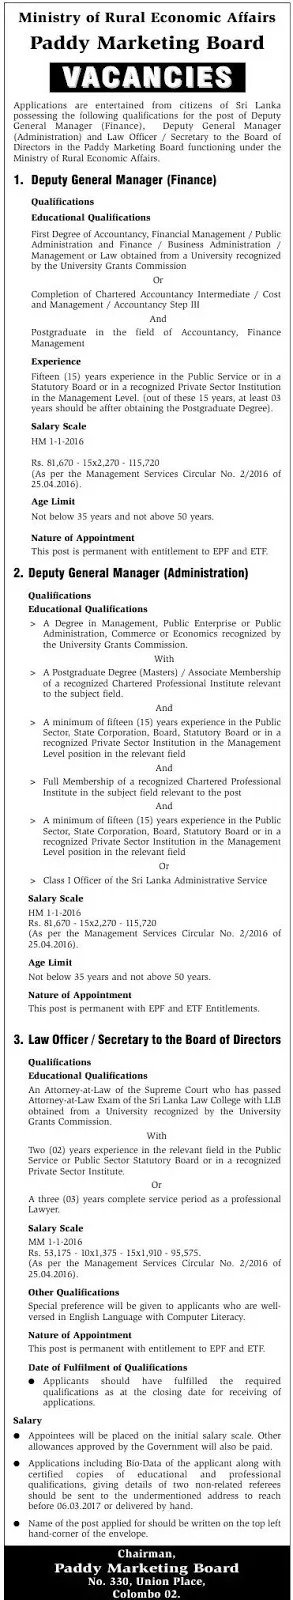 Paddy Marketing Board Sri Lanka Vacancies